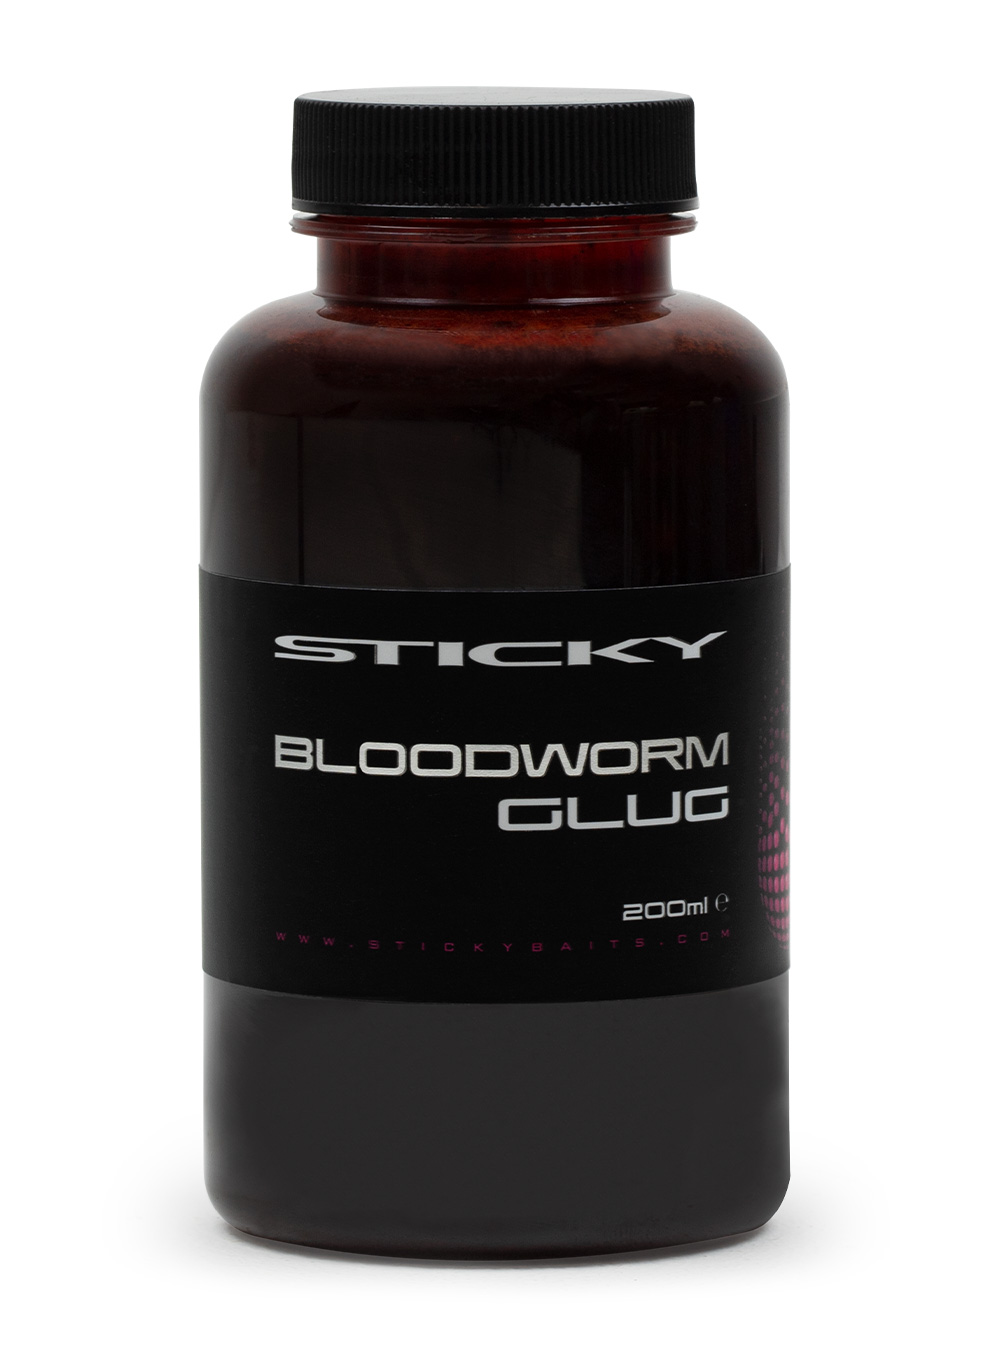 Sticky Baits Bloodworm Glug (200ml)